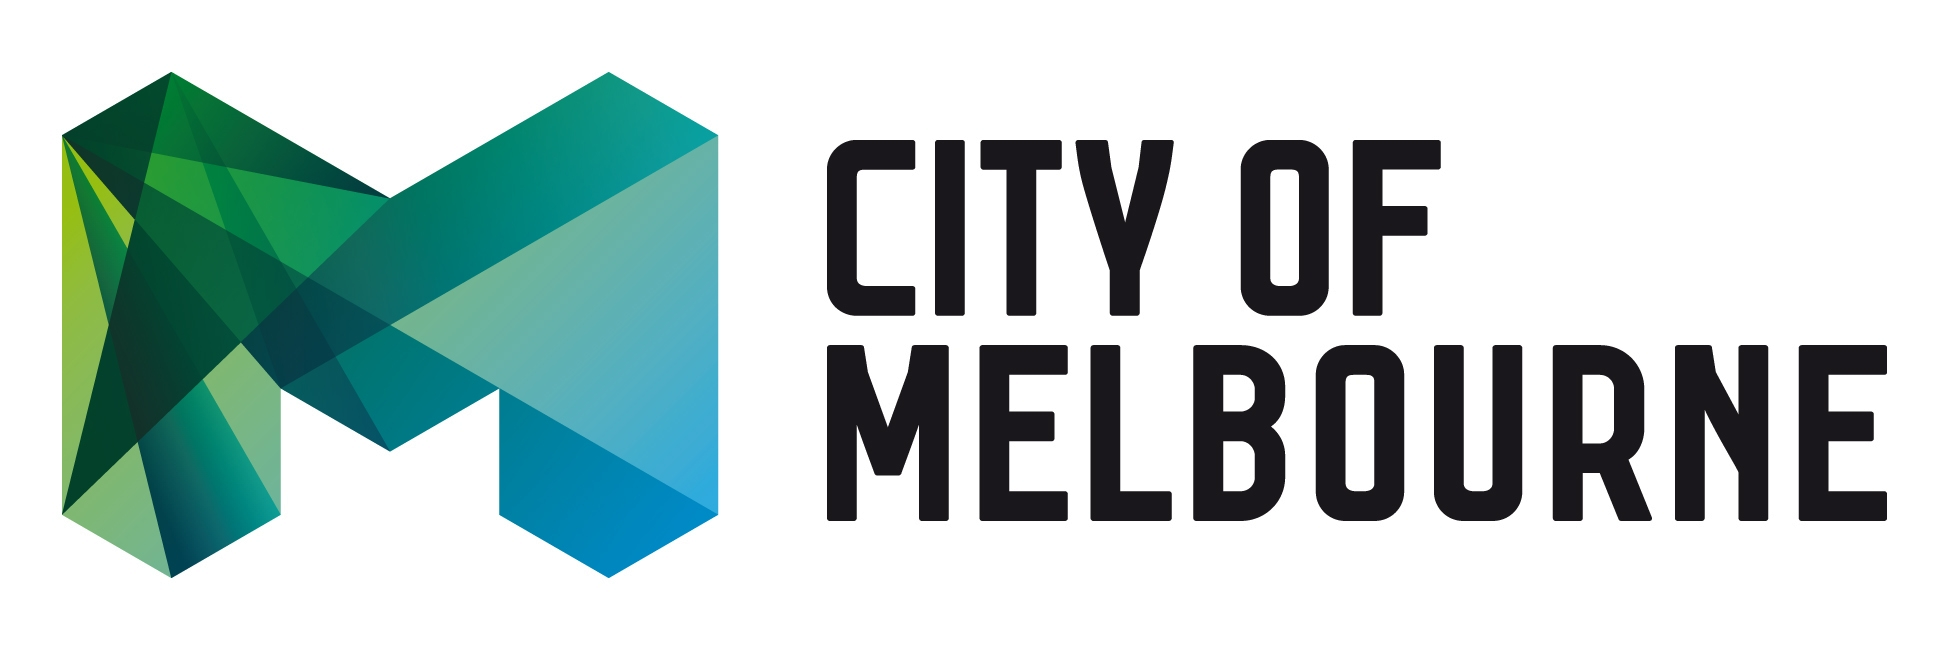 City of Melbourne LoRaWAN IoT